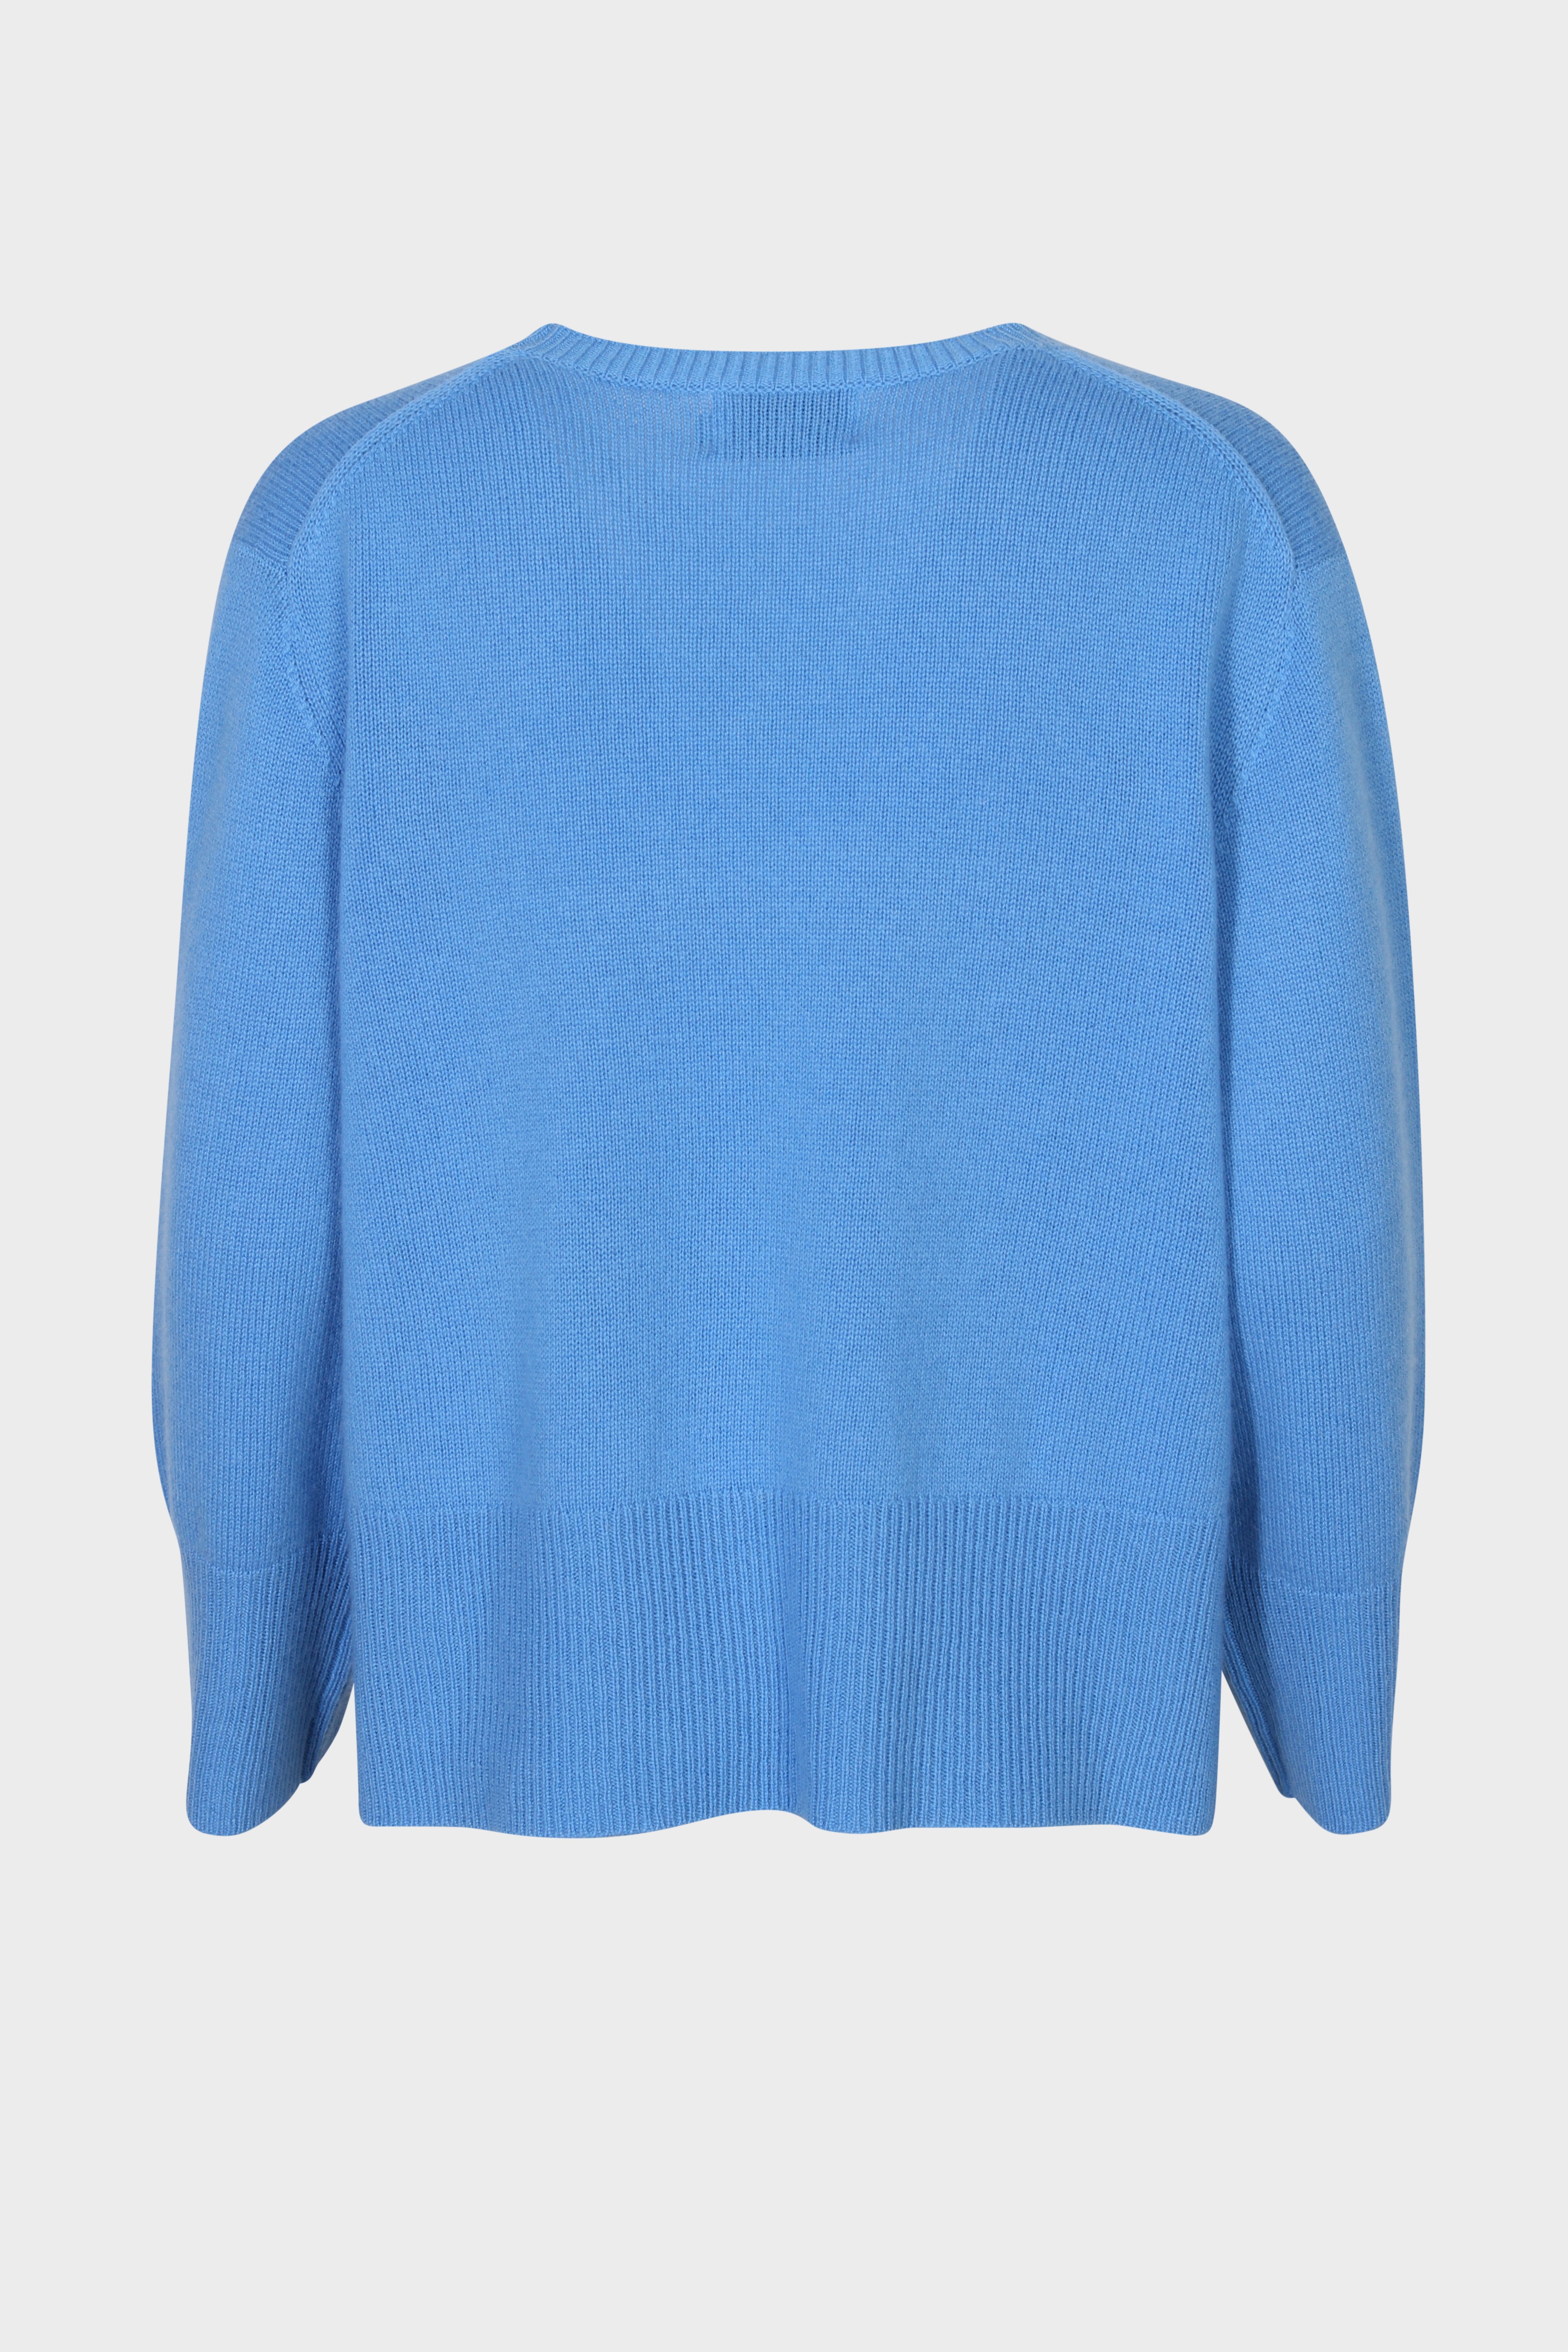 FLONA Cashmere Sweater in Azur M